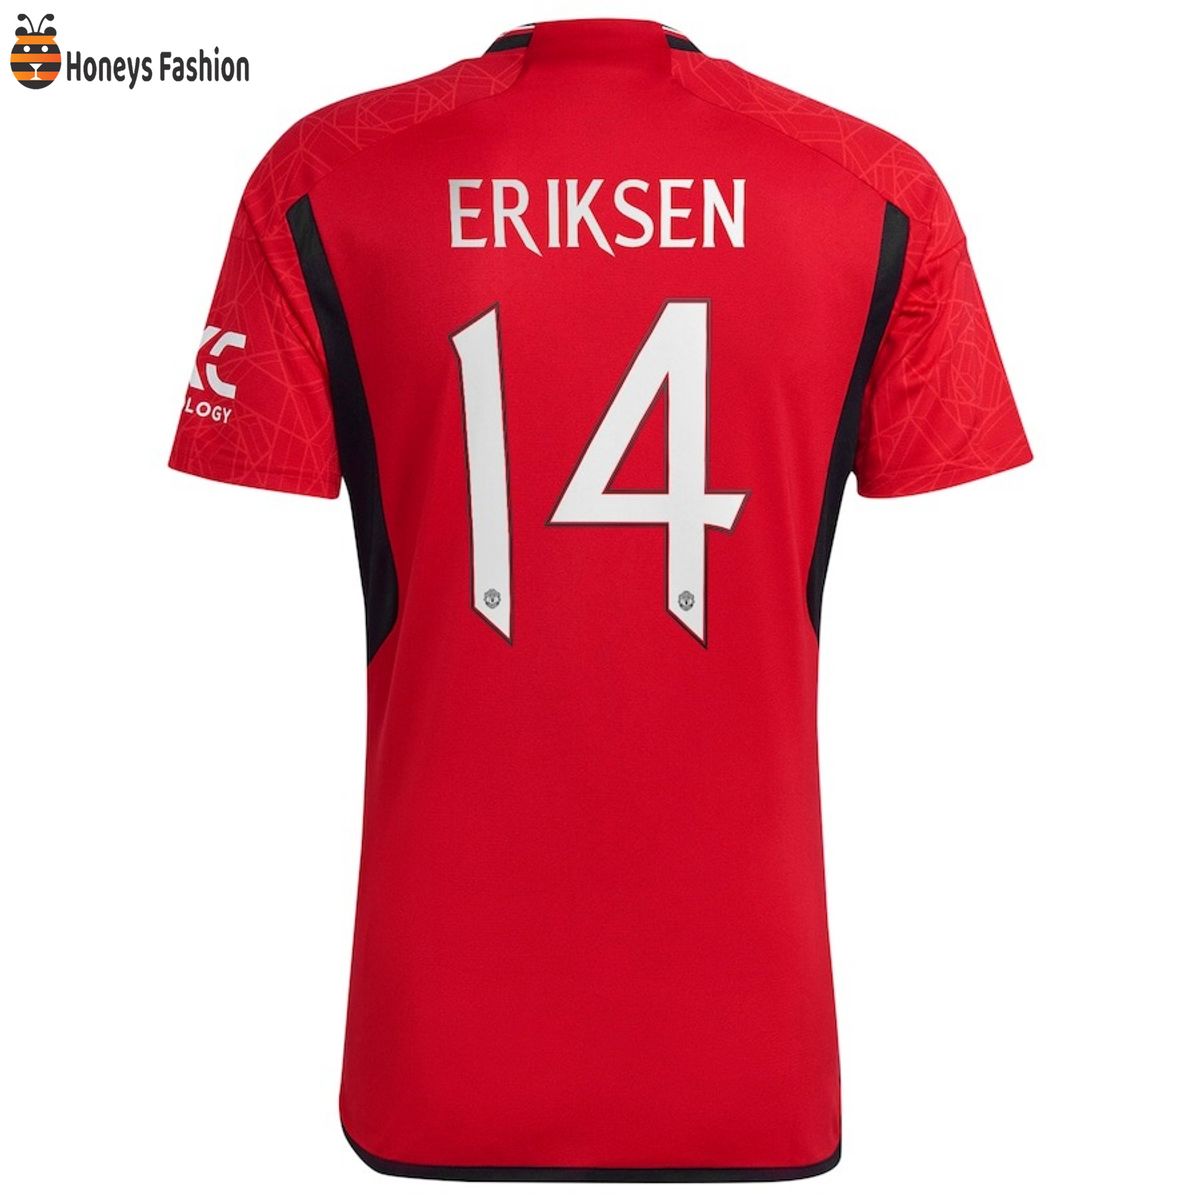 Eriksen 14 Manchester United Premier League 23-24 Jersey